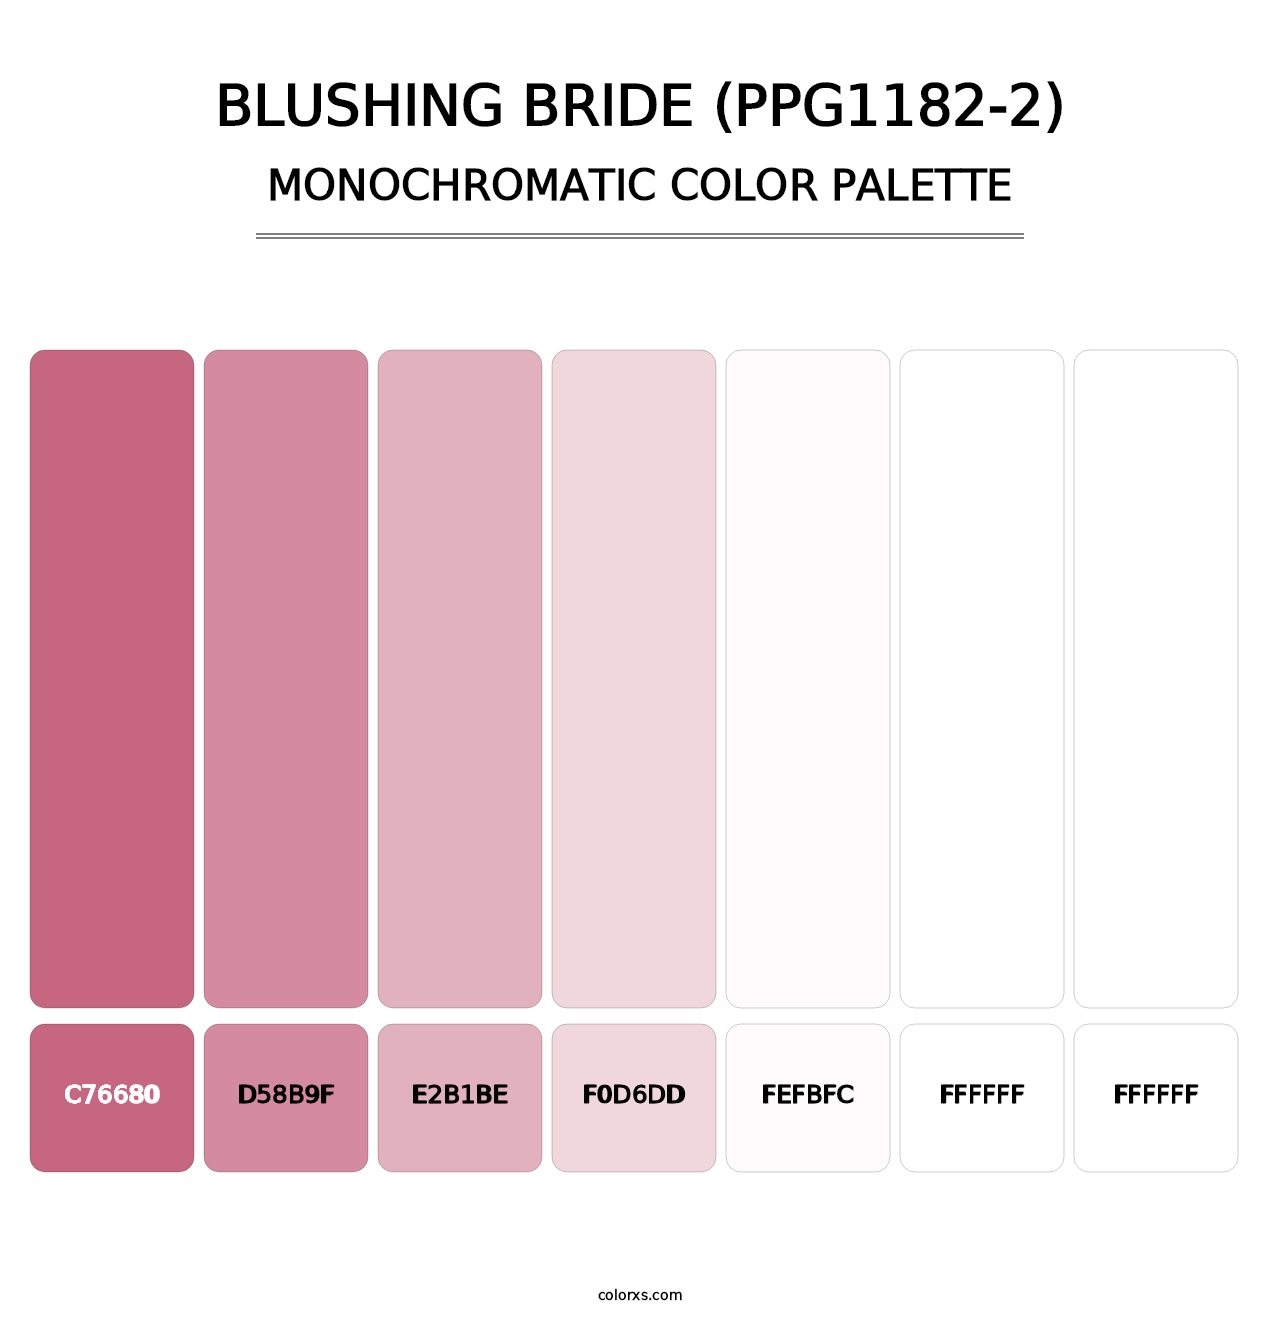 Blushing Bride (PPG1182-2) - Monochromatic Color Palette